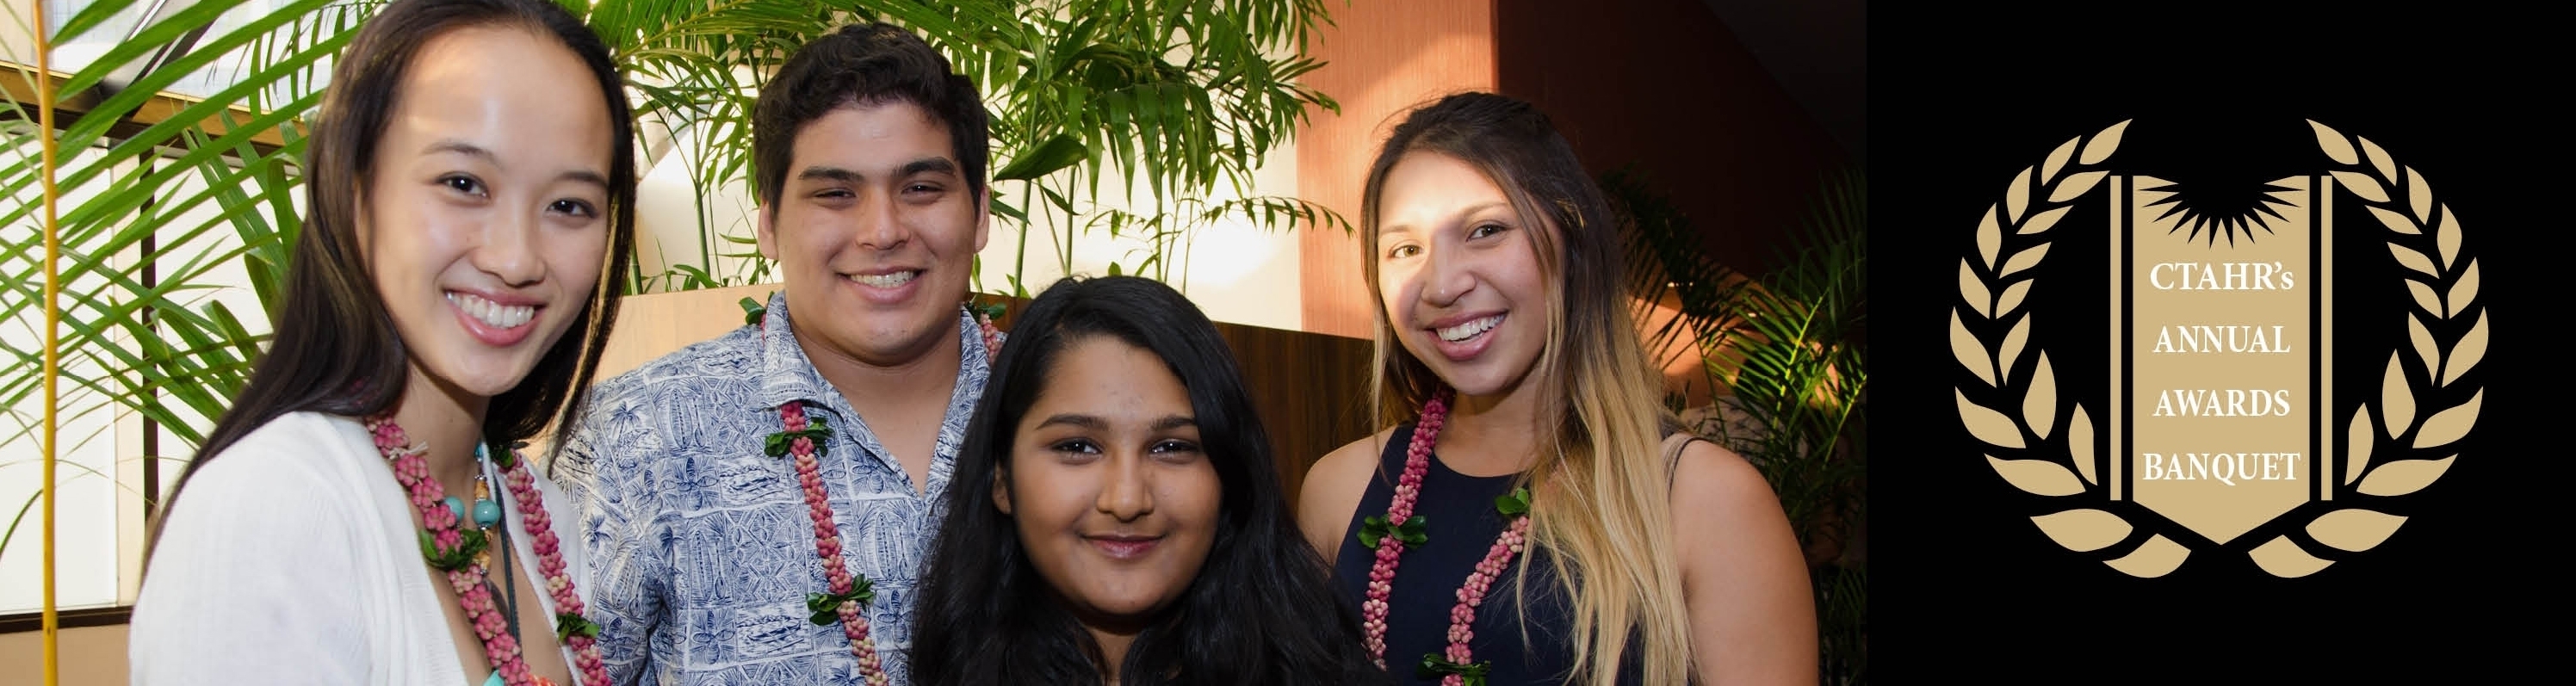 four smiling student next to CTAHR Banquet mark